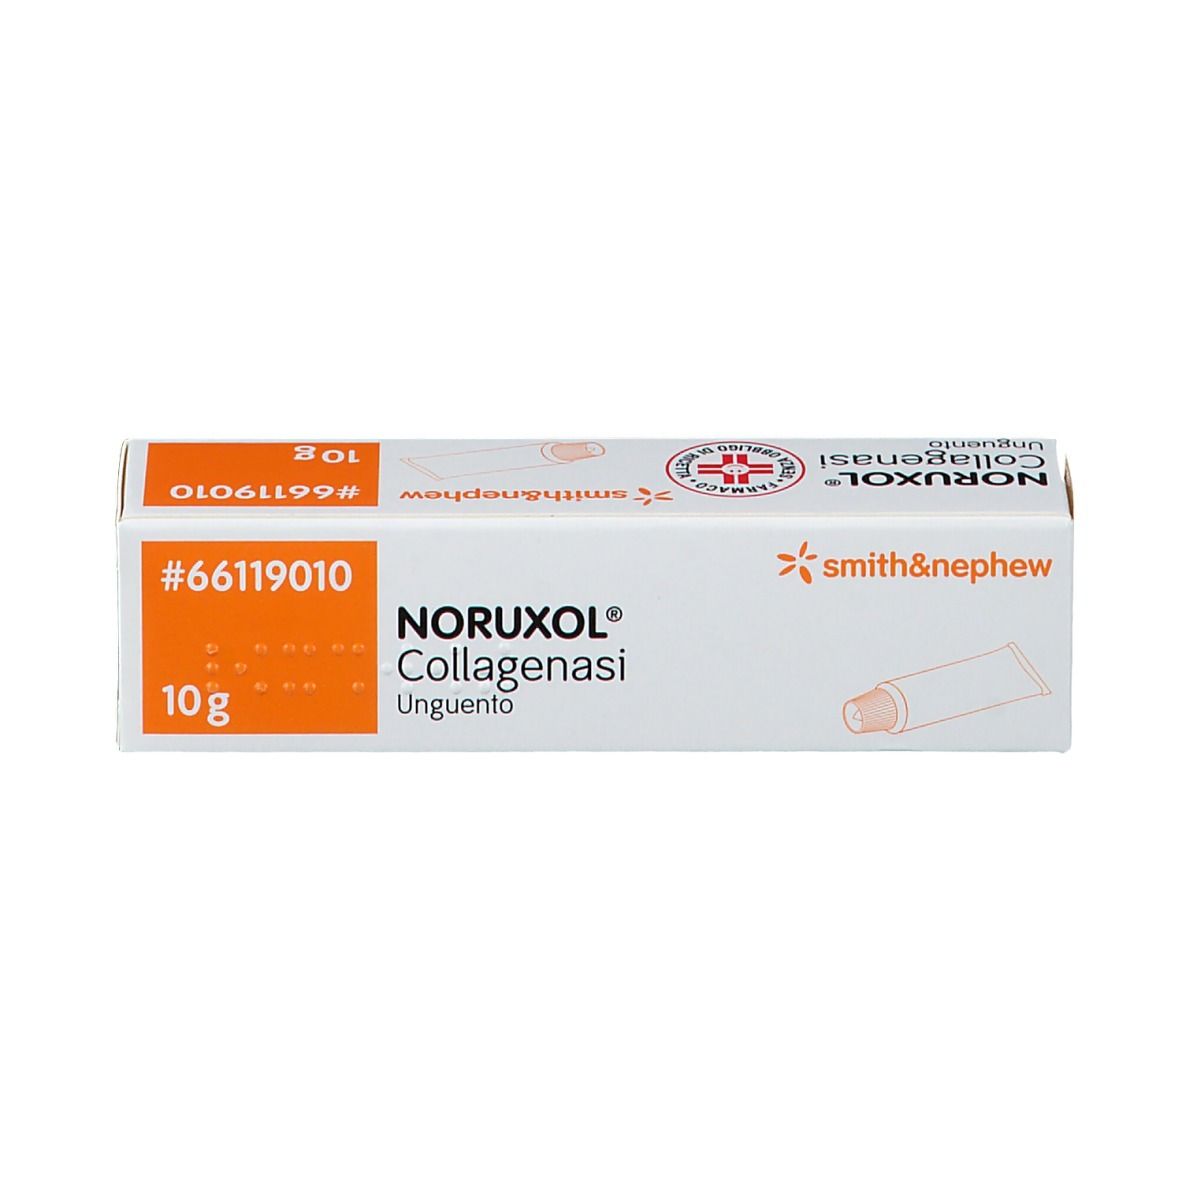 NORUXOL® Collagenasi Unguento 10 g